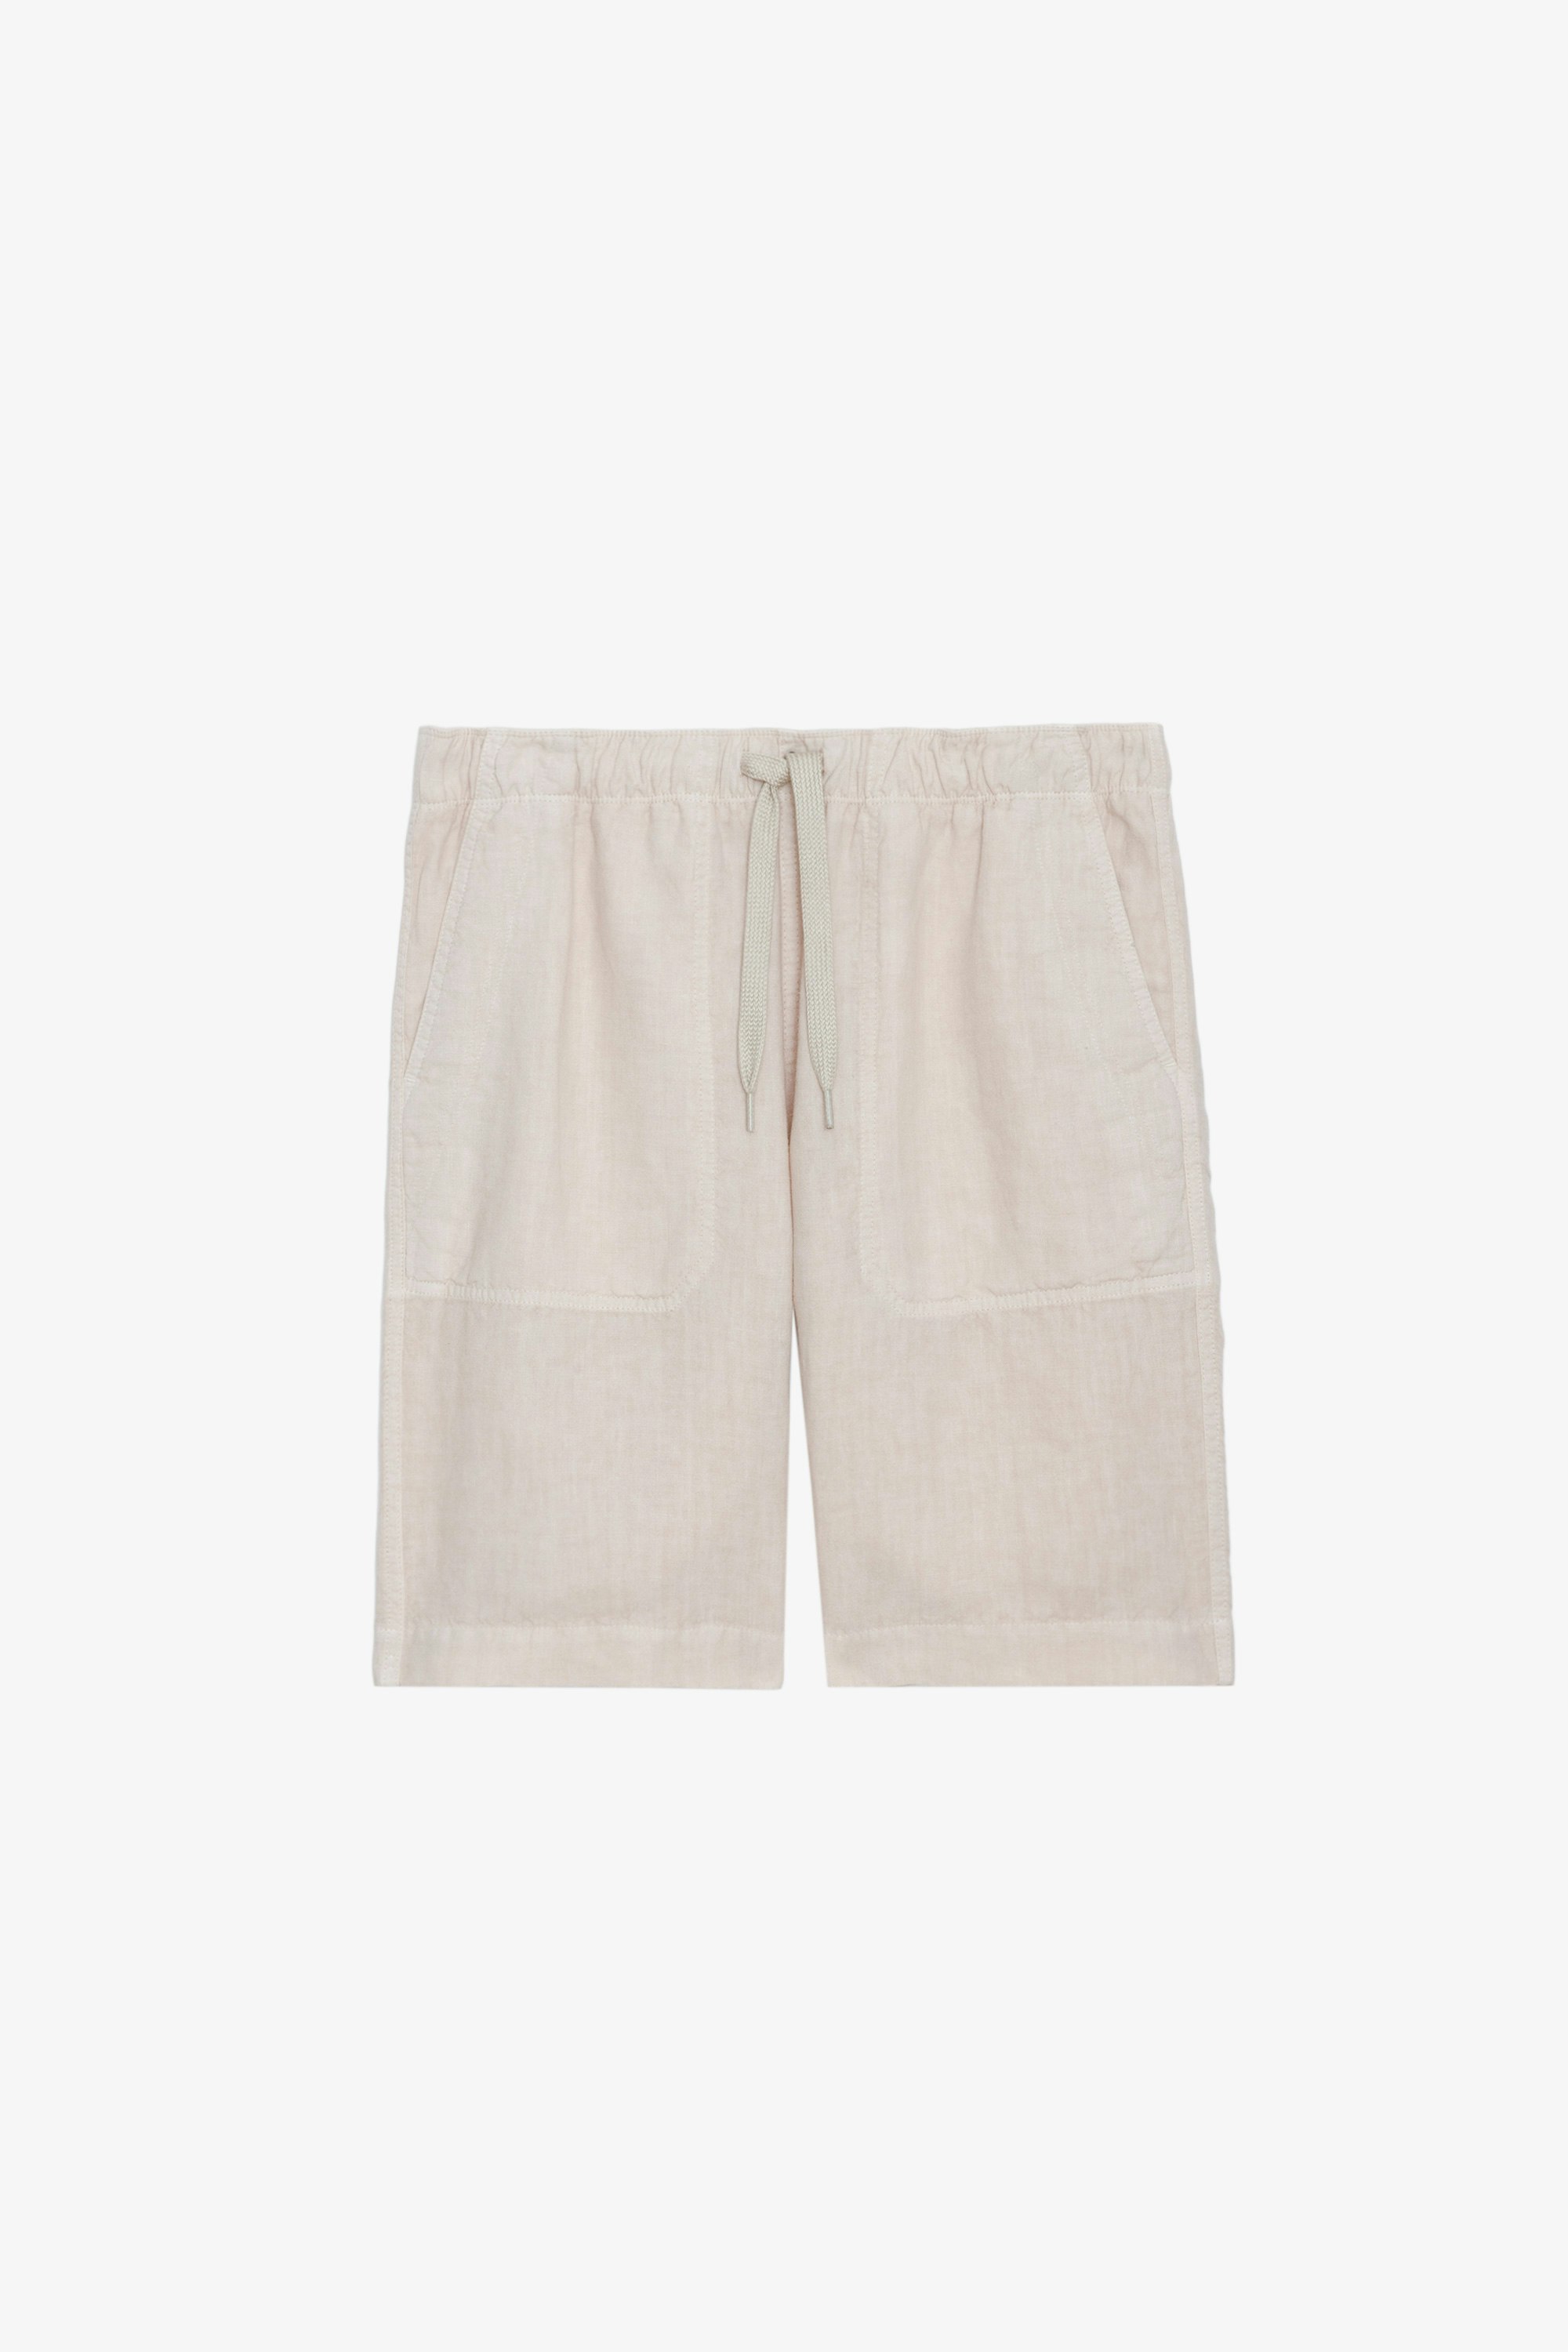 Pixel Linen Bermuda Shorts - Beige washed linen Bermuda shorts with drawstring ties.